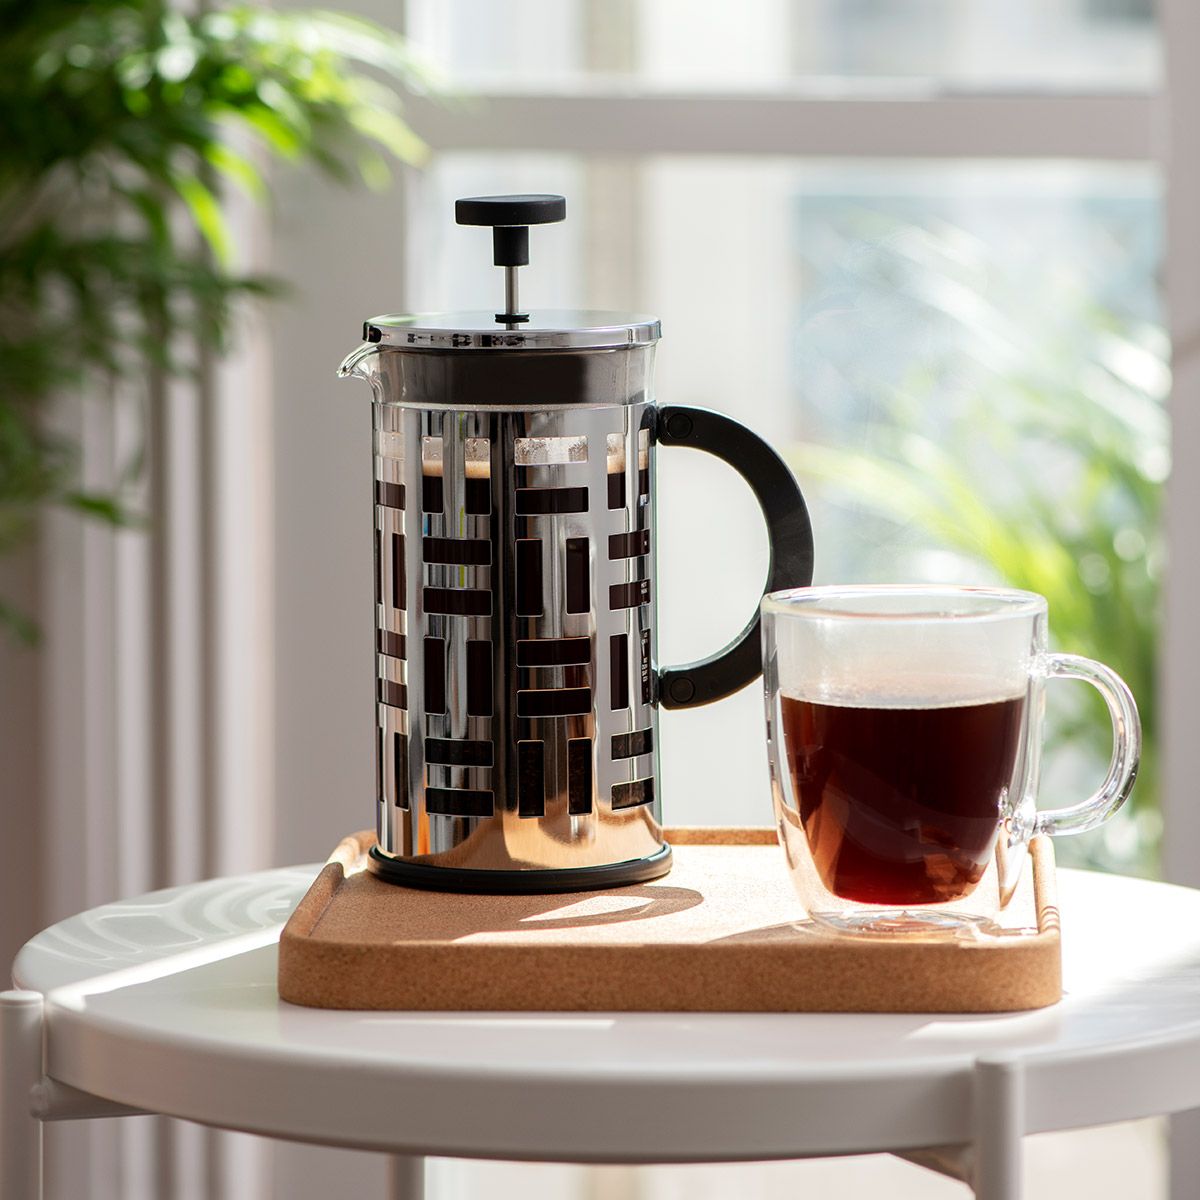 Bodum Eileen French Press coffee maker 3 cup 12 oz - Shiny